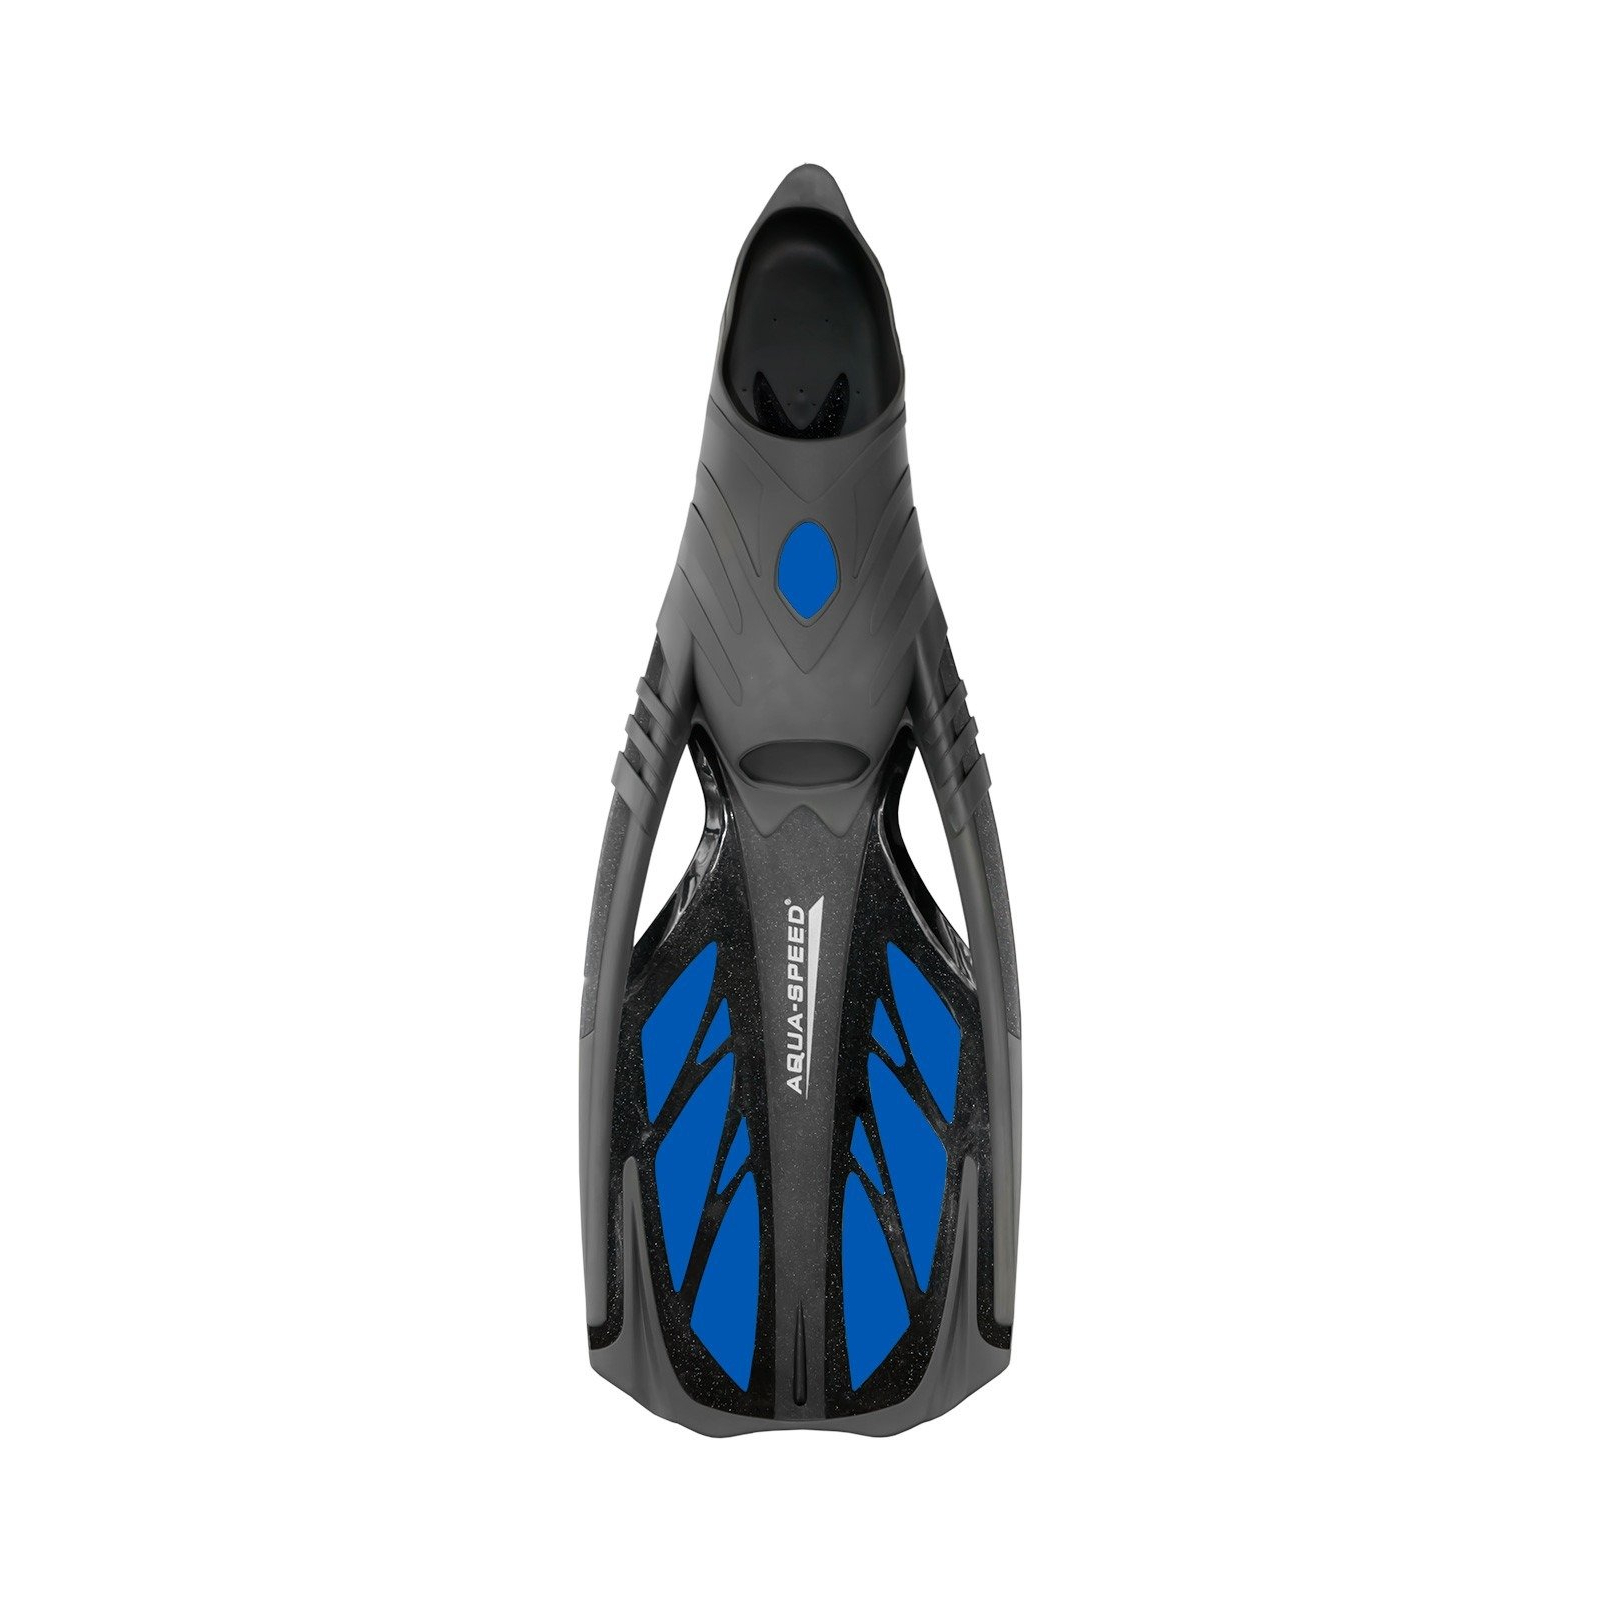 Ласты Aqua Speed Inox 553-11 5114 синій, чорний, сірий 40-41 (5908217651143) изображение 3